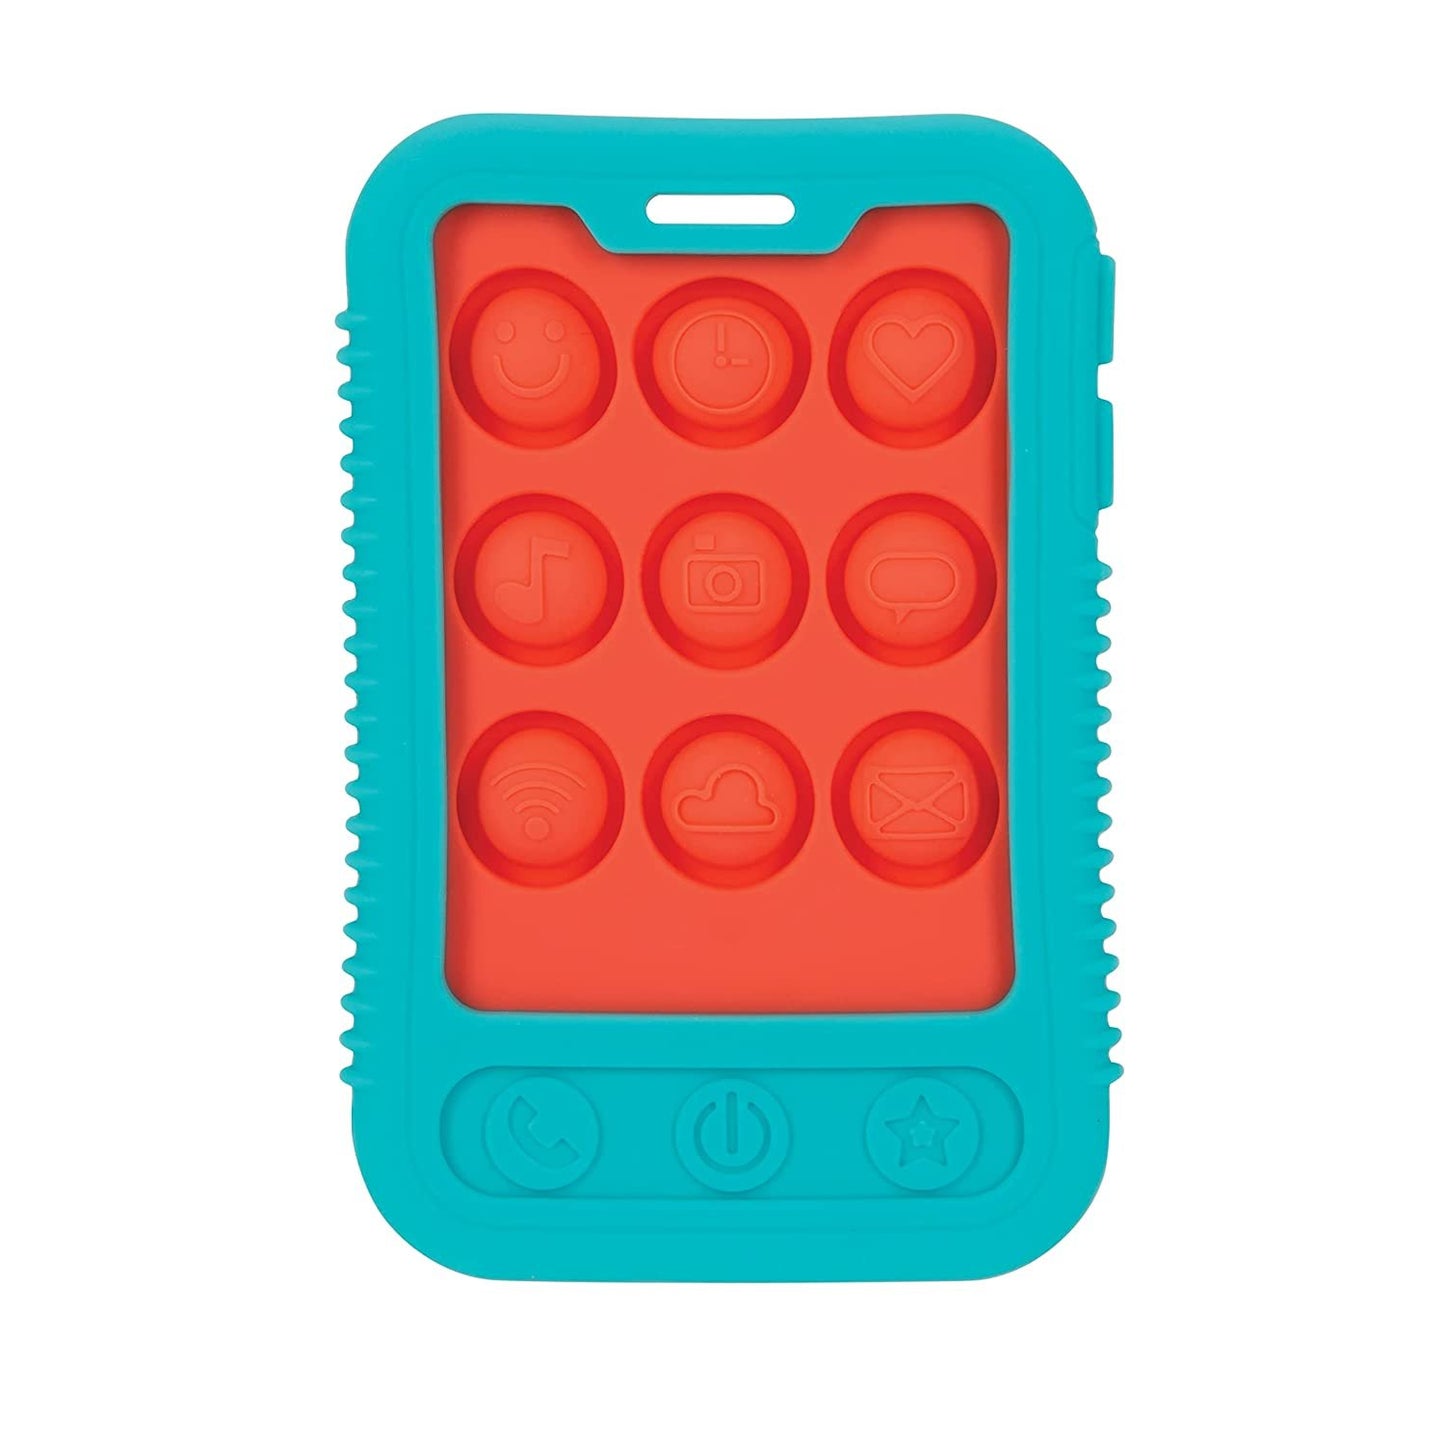 Nuby Baby Teething Toy - BPA Free - 3+ Months - Giggle Bytes Sensory Popper Cellphone - Aqua